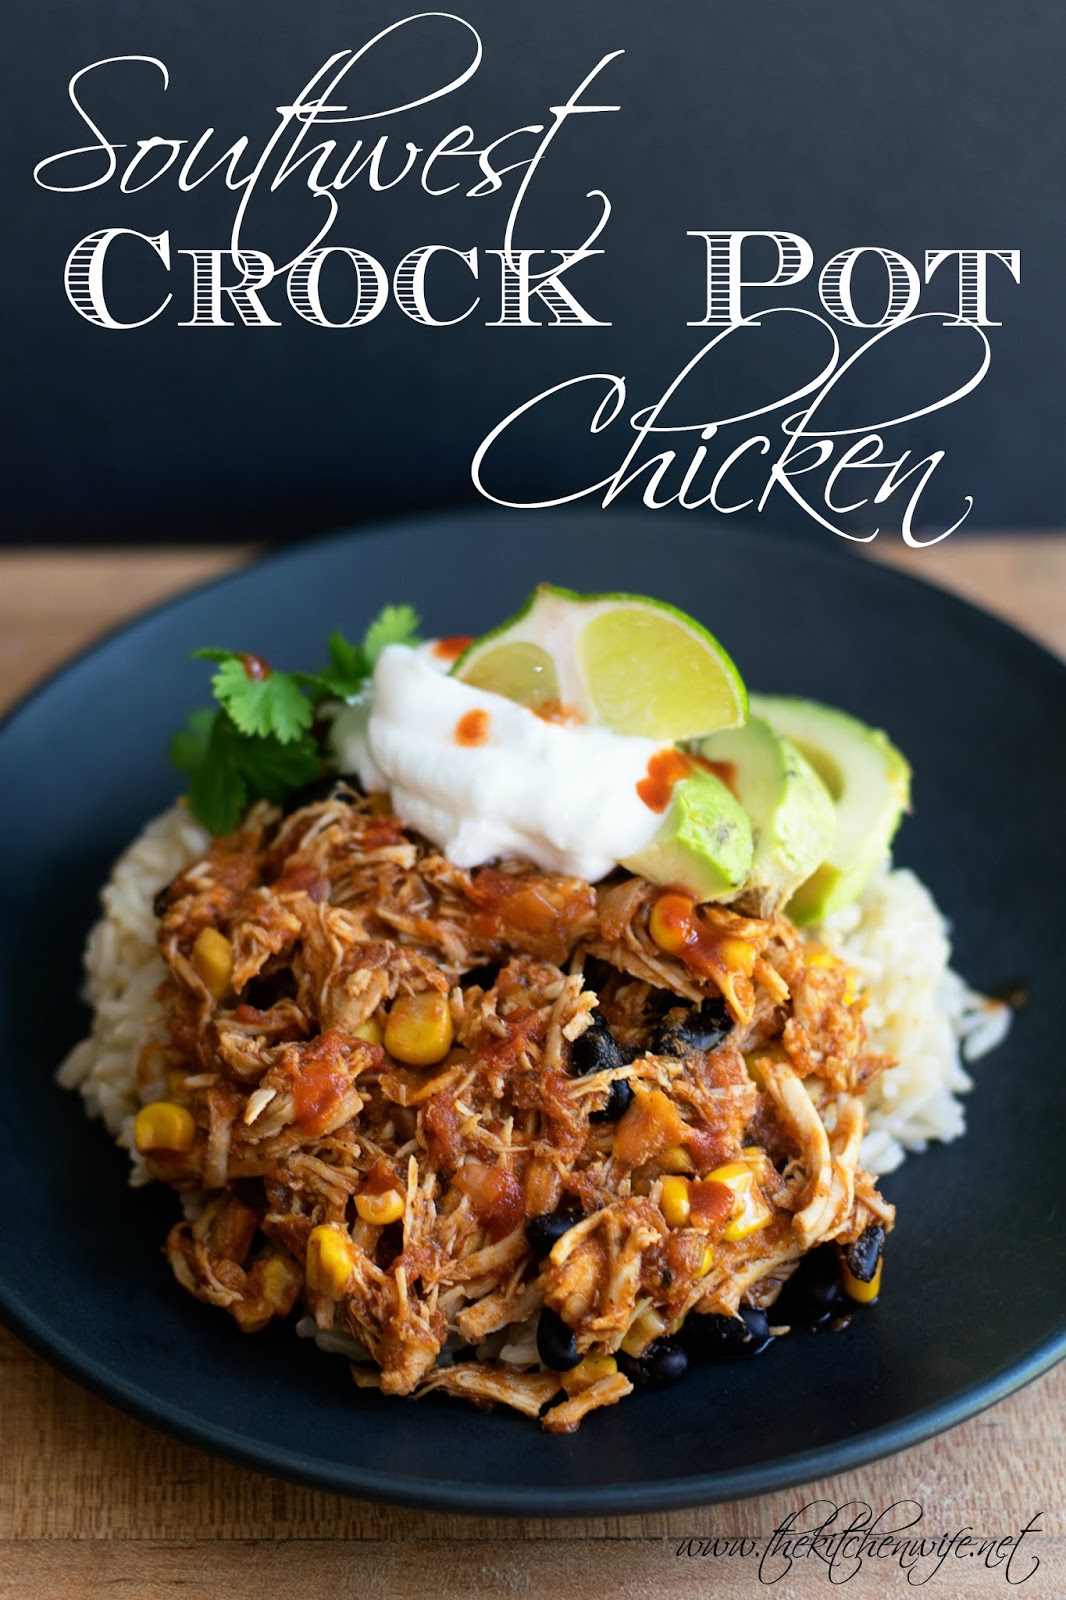 Easy Southwest Crock Pot Chicken Recipe - ~The Kitchen Wife~